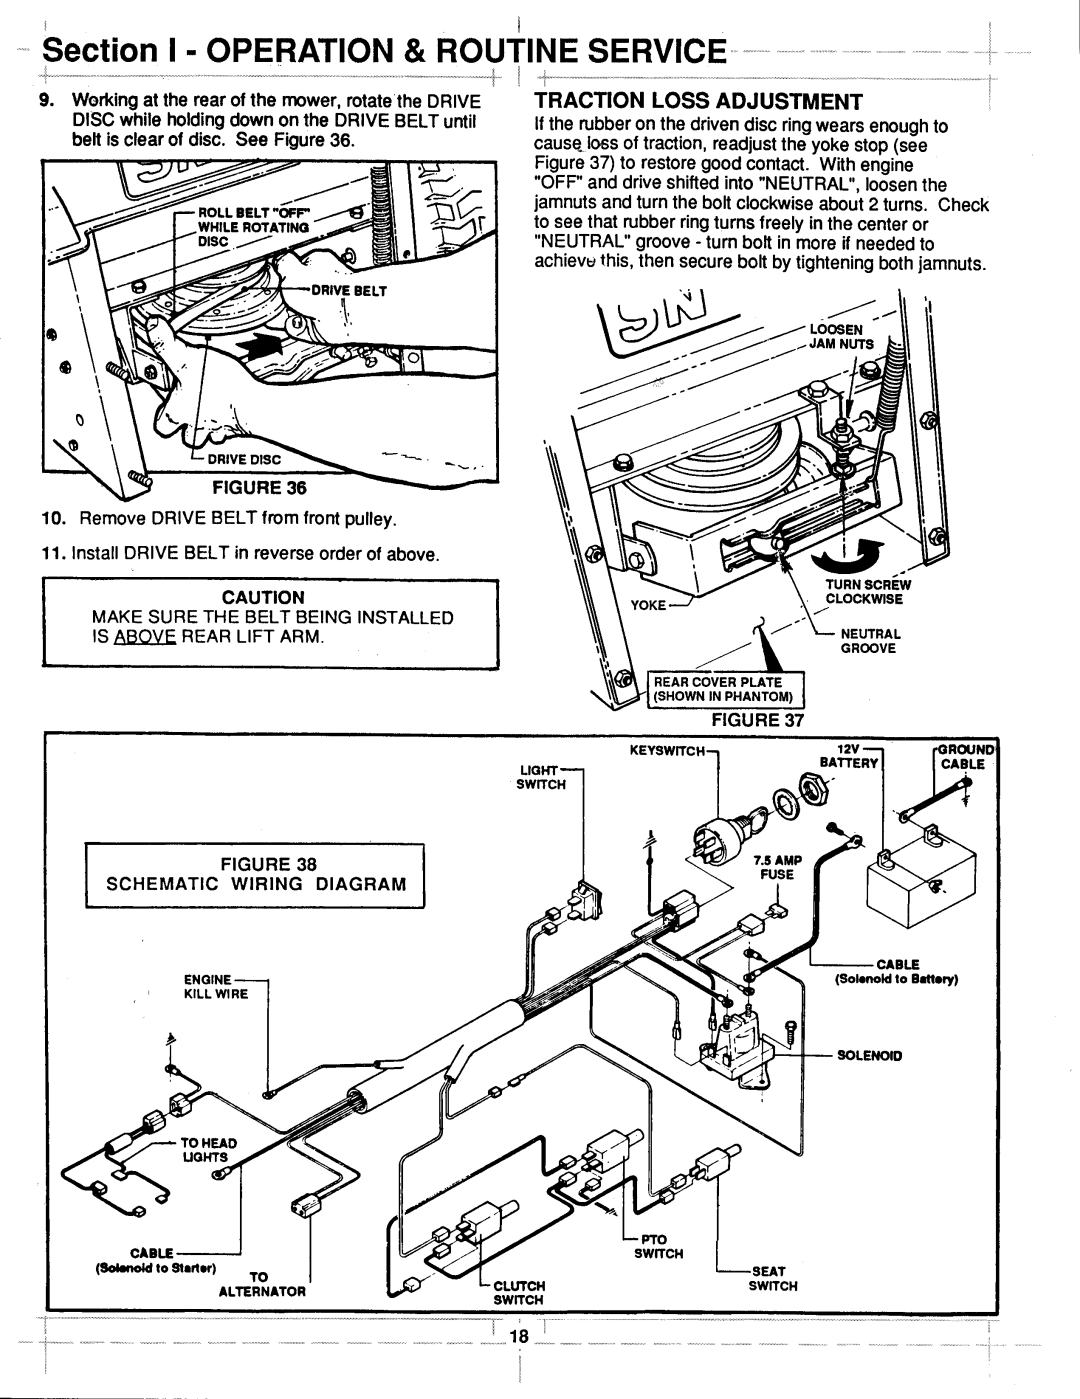 Snapper LTD Series 0 manual 